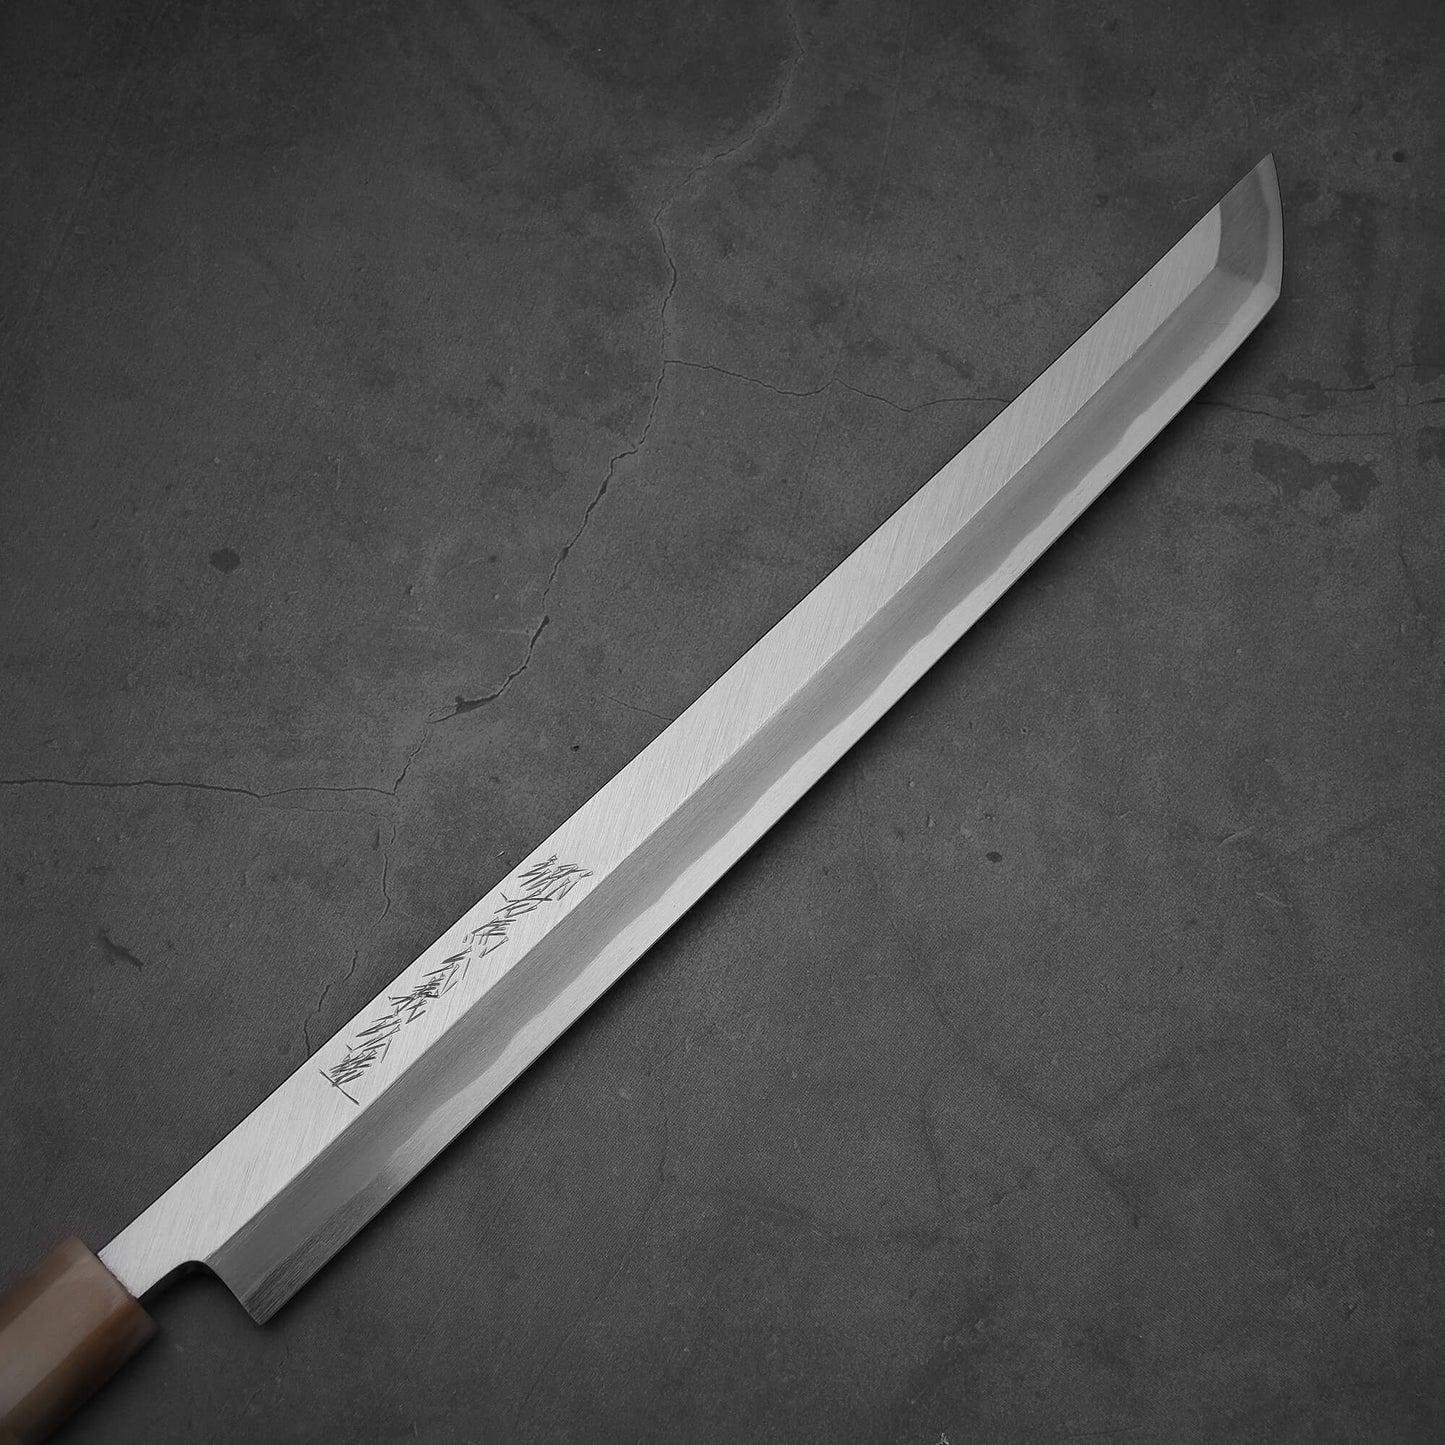 Close up view of the Yoshikazu Tanaka 300mm sakimaru takohiki knife with a hand-forged blade made of shirogami#2 steel.